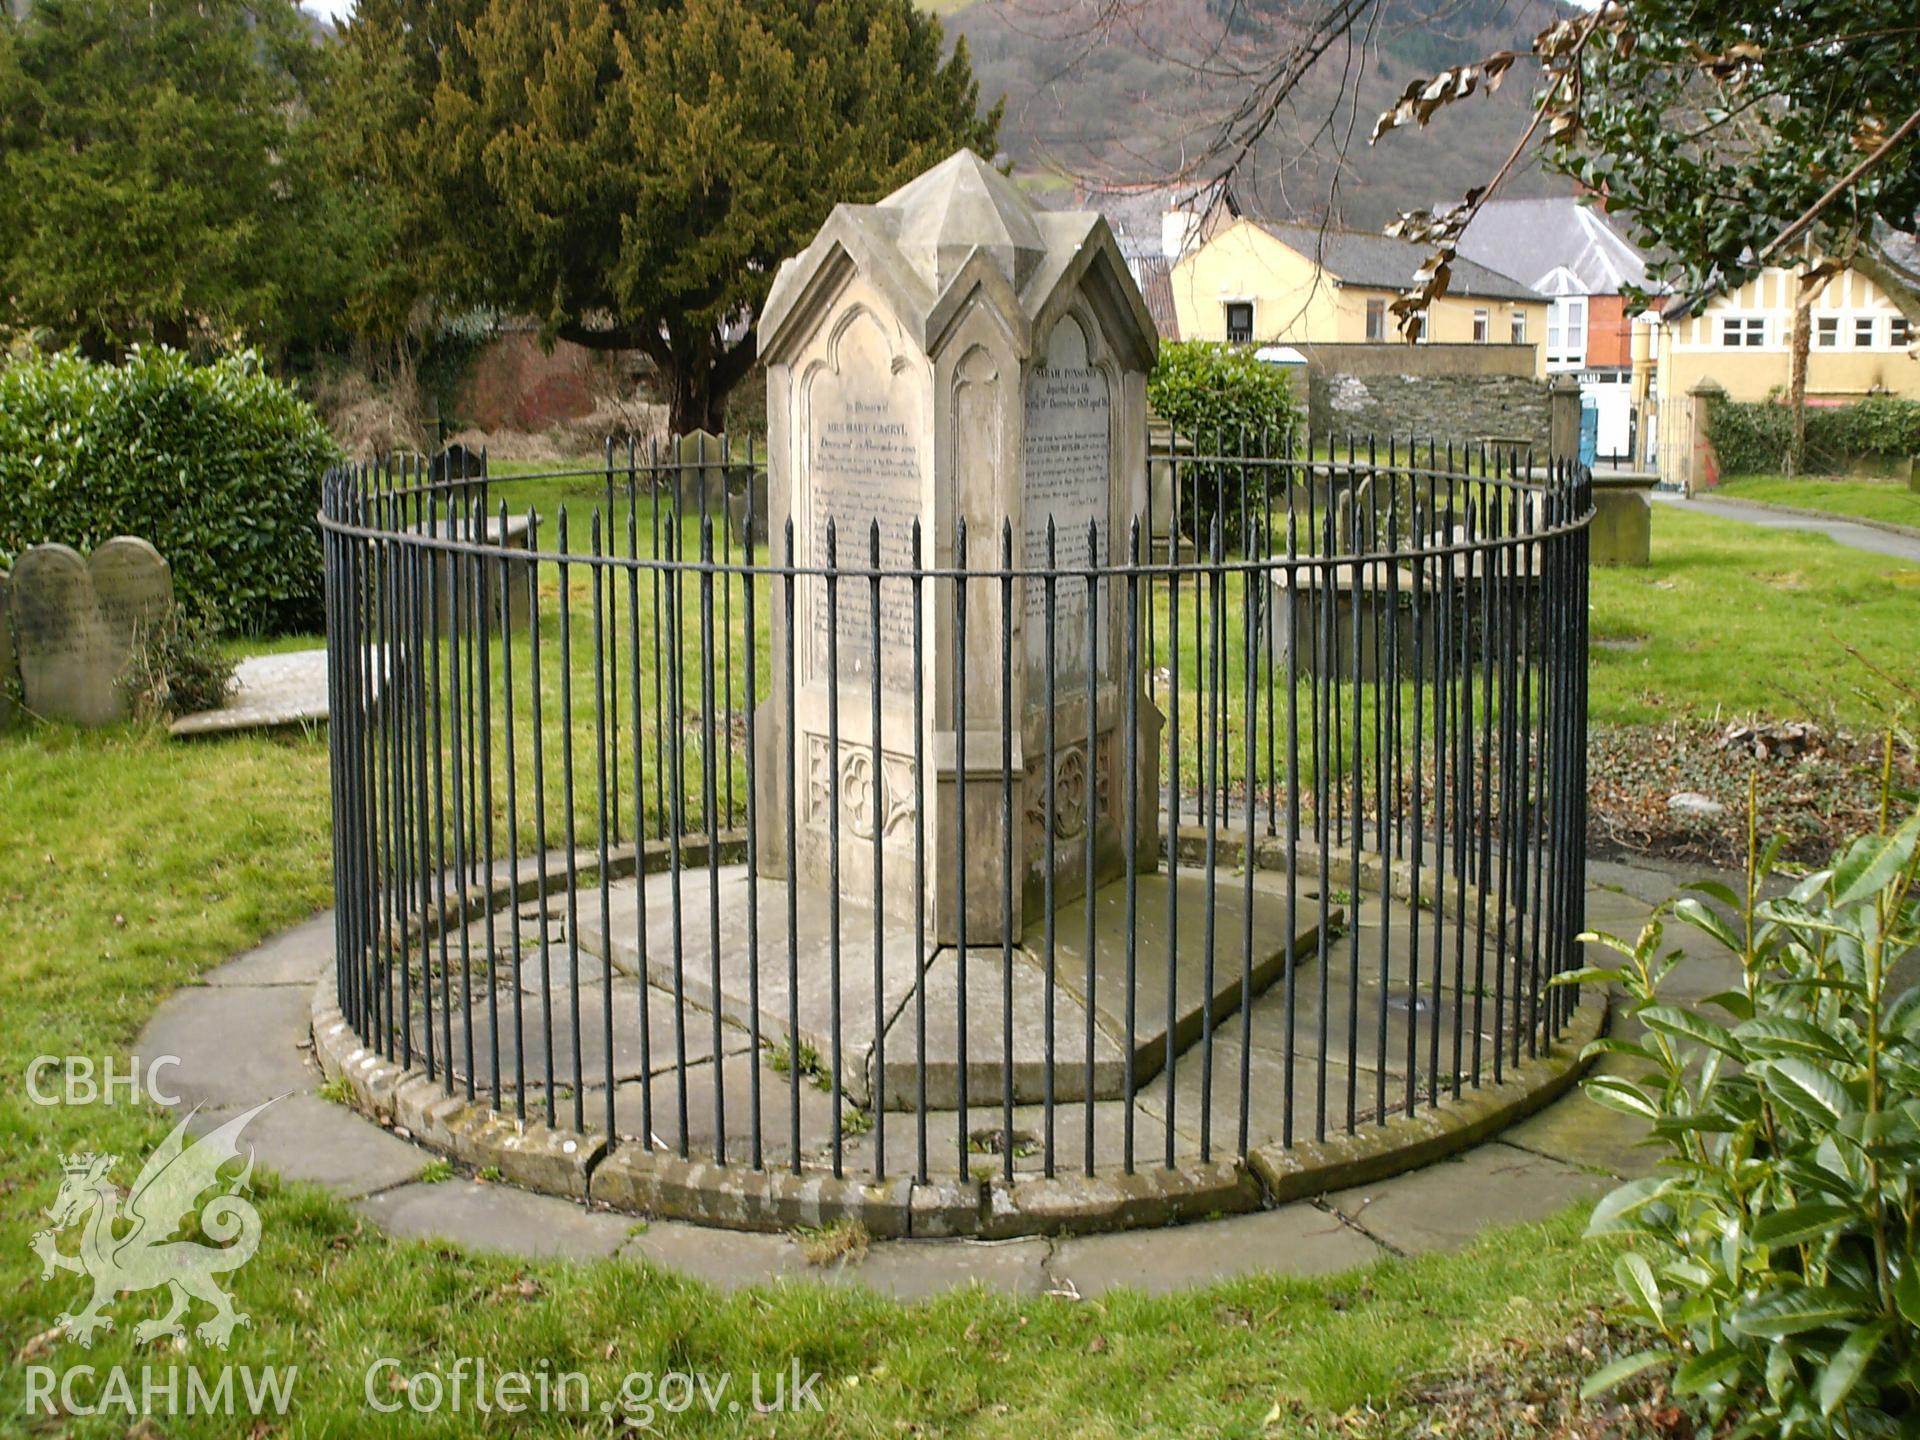 Digital image showing the pre-restoration monument.